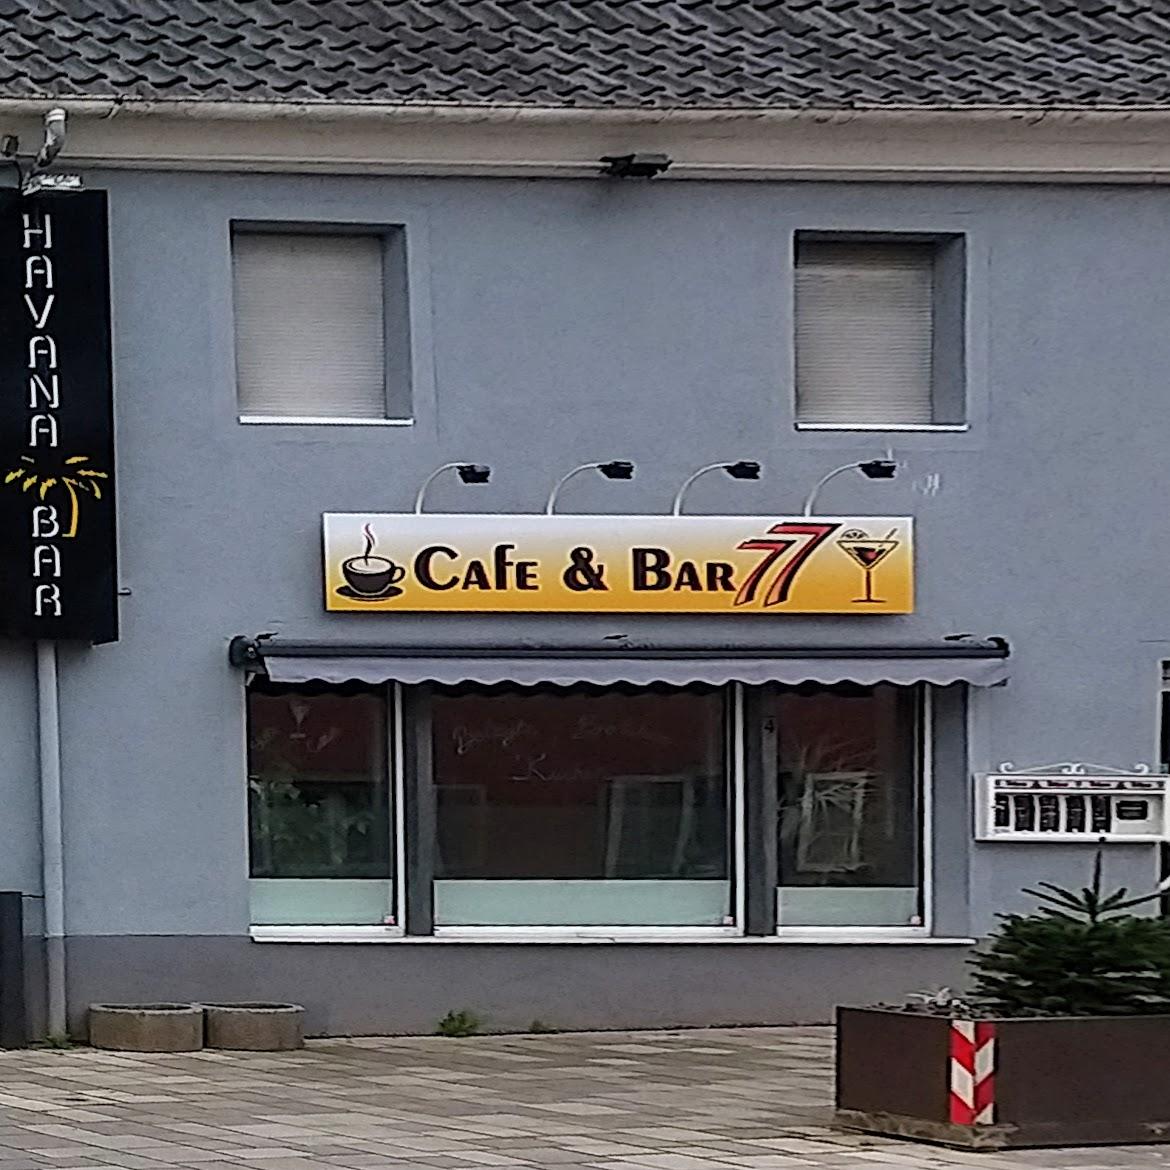 Restaurant "Café Bar 77" in Bad Krozingen